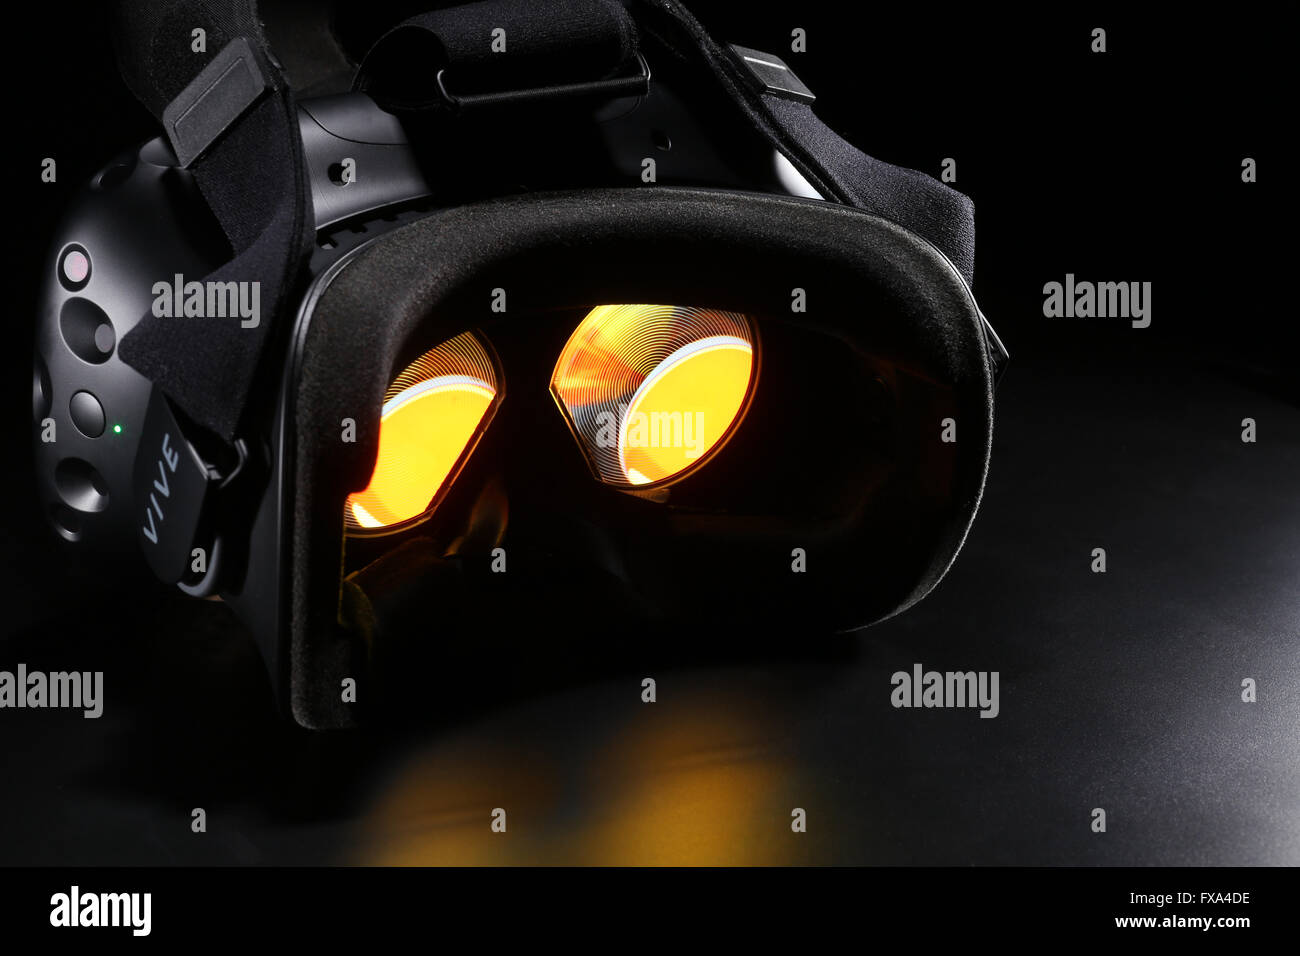 HTC Vive virtual reality headset Stock Photo